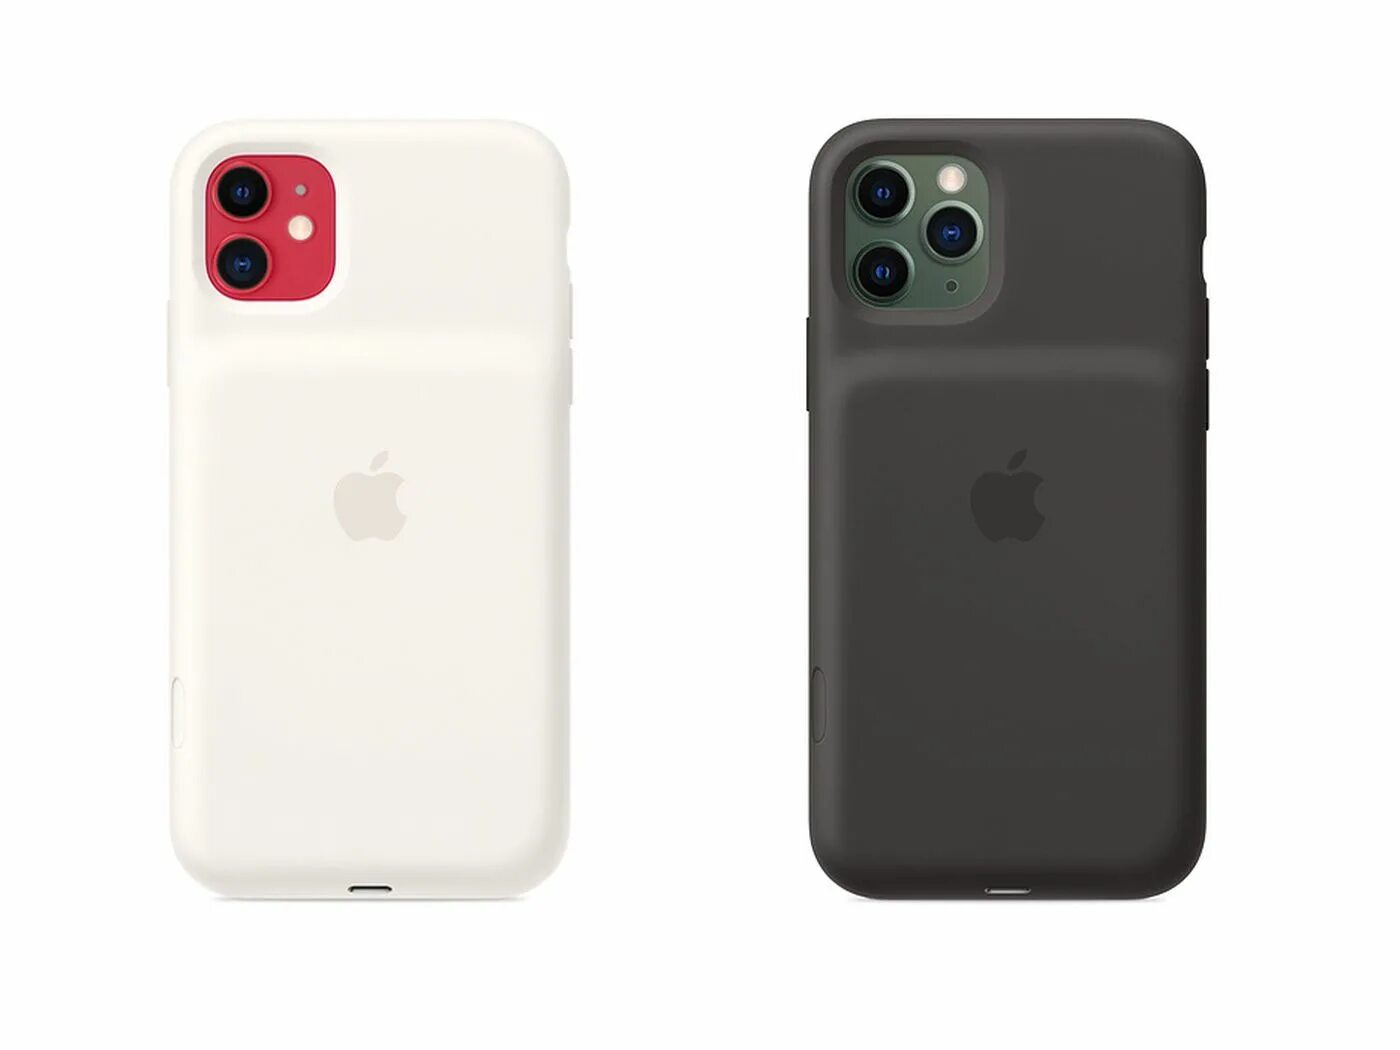 Apple case 15 pro max. Smart Battery Case iphone 11 Pro. Battery Case iphone \11 Pro Max. Apple Smart Battery Case iphone 11. Apple Smart Battery Case 11 Pro Max.